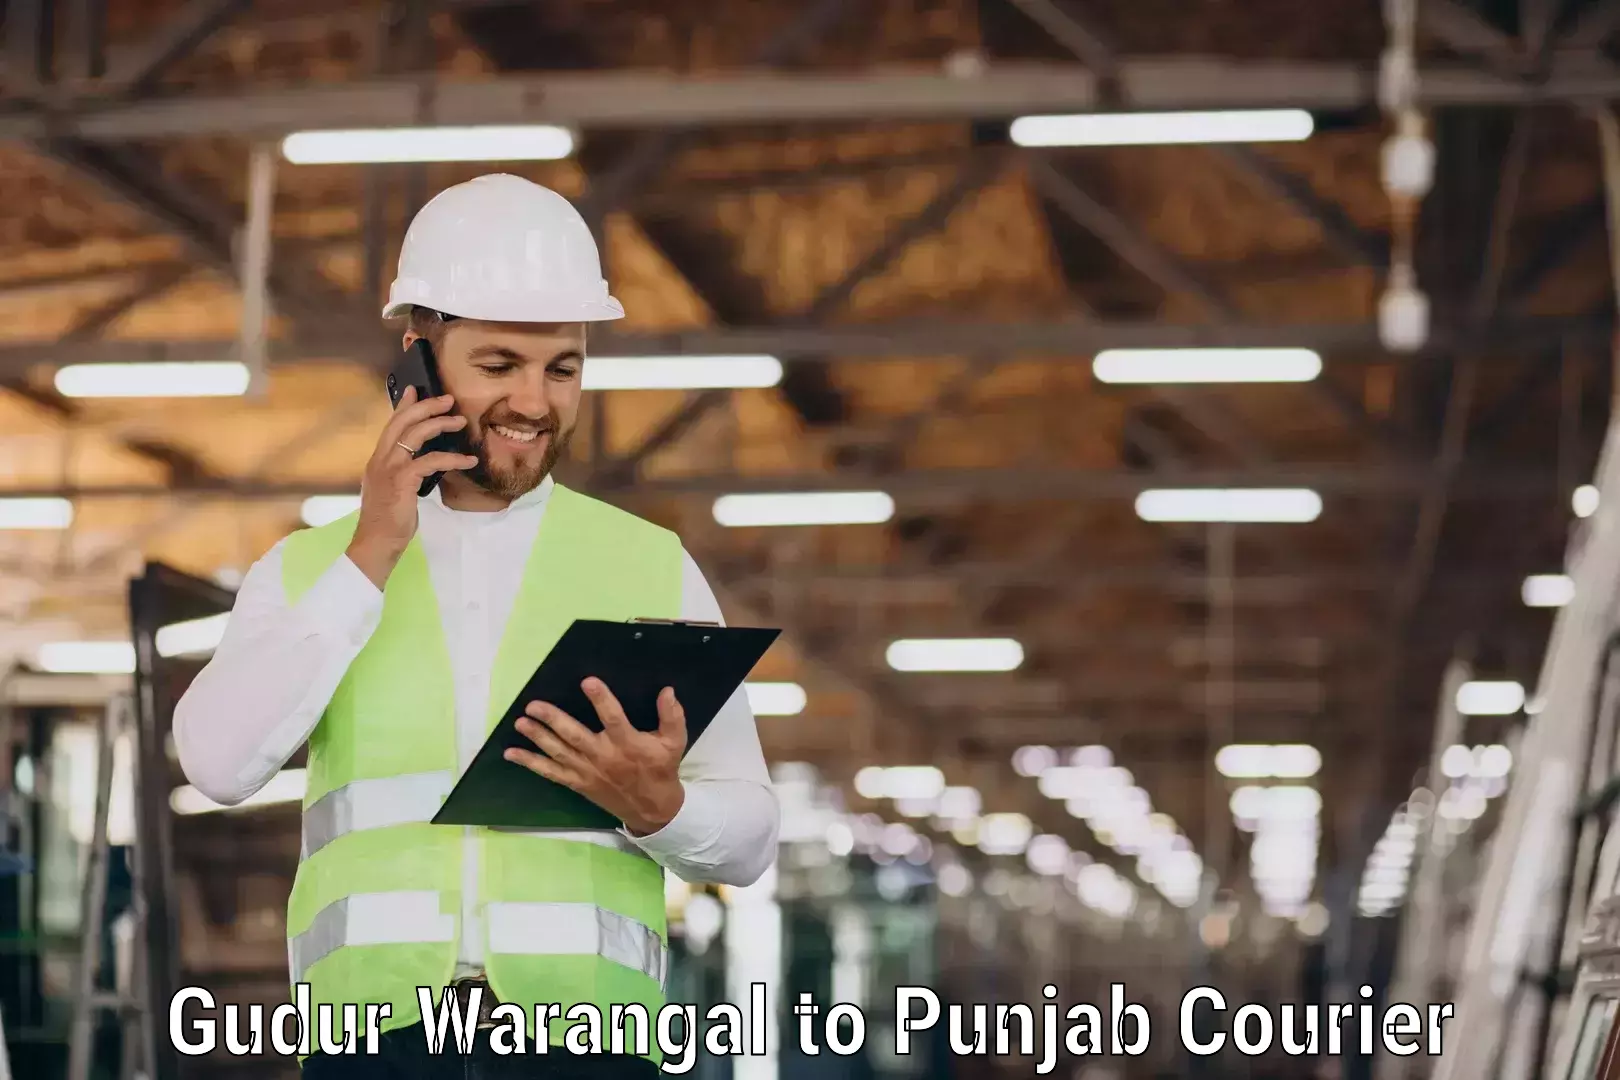 Optimized delivery routes Gudur Warangal to Punjab